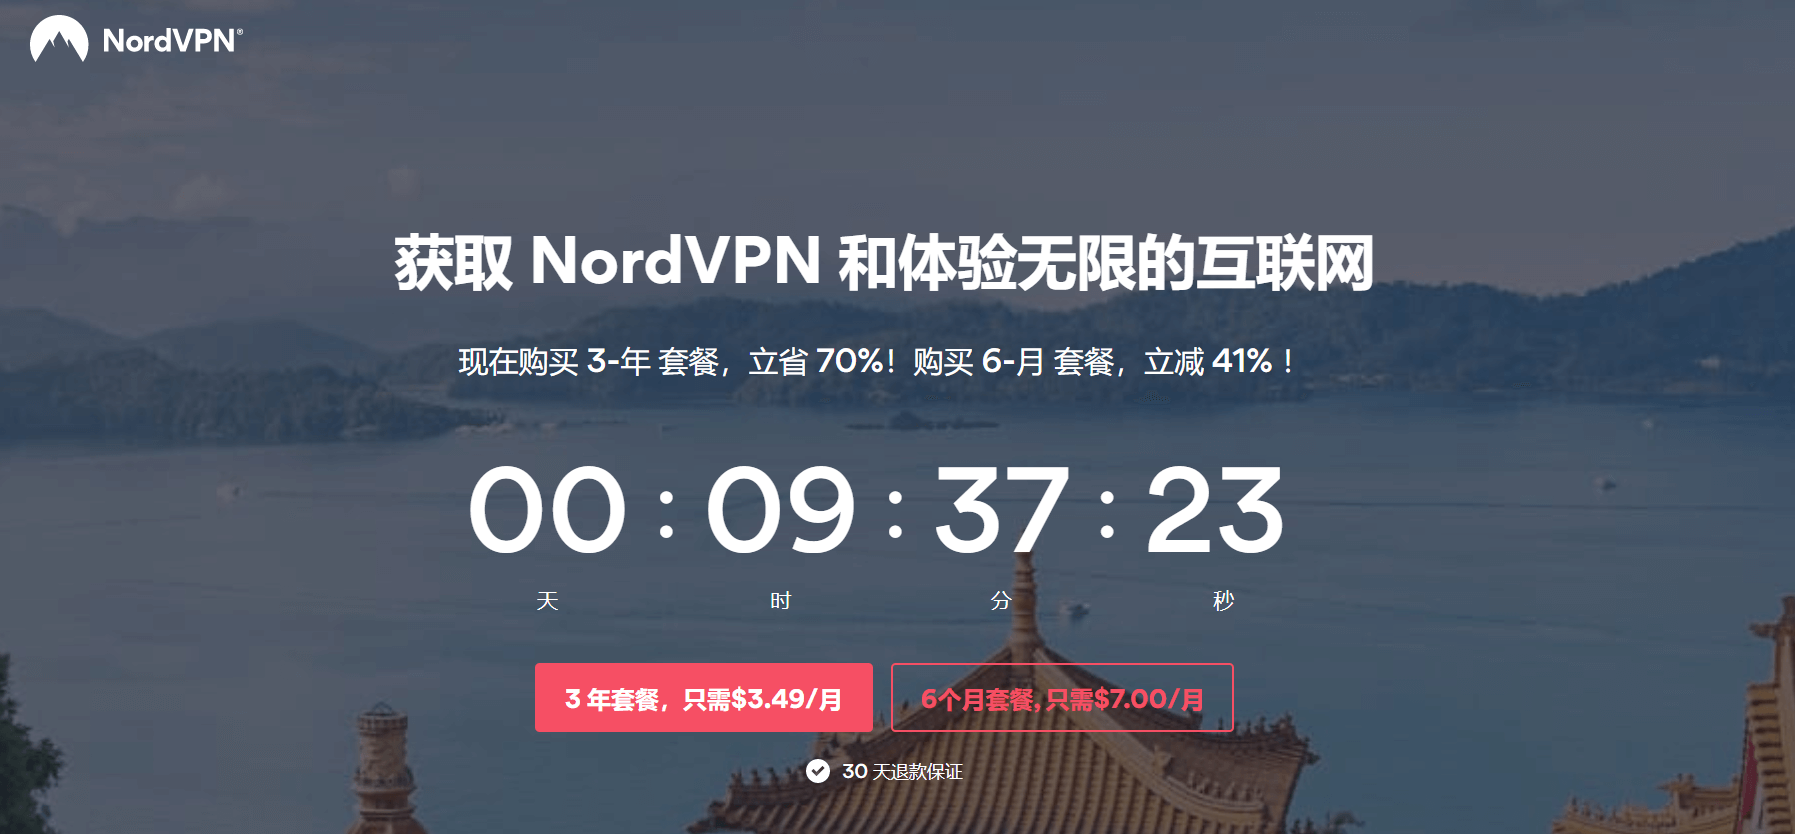 nordvpn 7天免费VPN使用权益